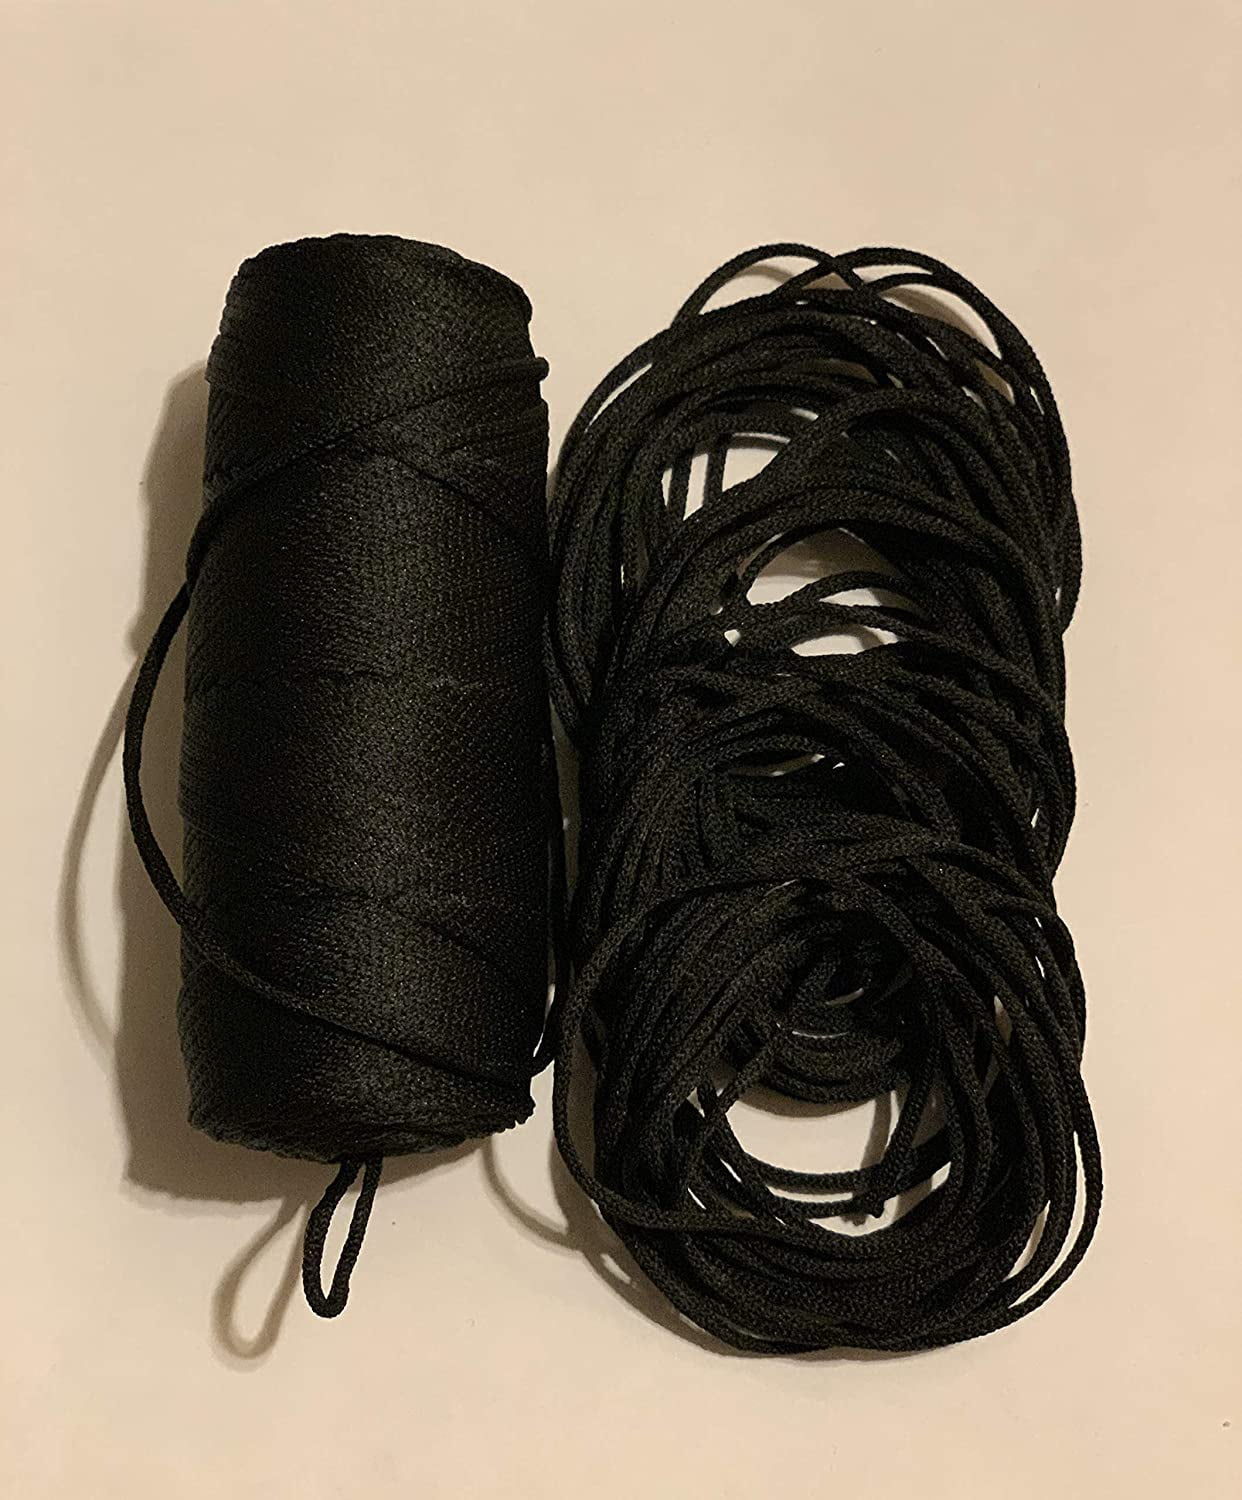 Black, 2-inch 2 INCH Black Sewing Elastic Band 2 INCH Wide Braided Elastic 5.5Yard Craft Elastic Hair Wig Band Knitted Elastic with Heavy Stretch